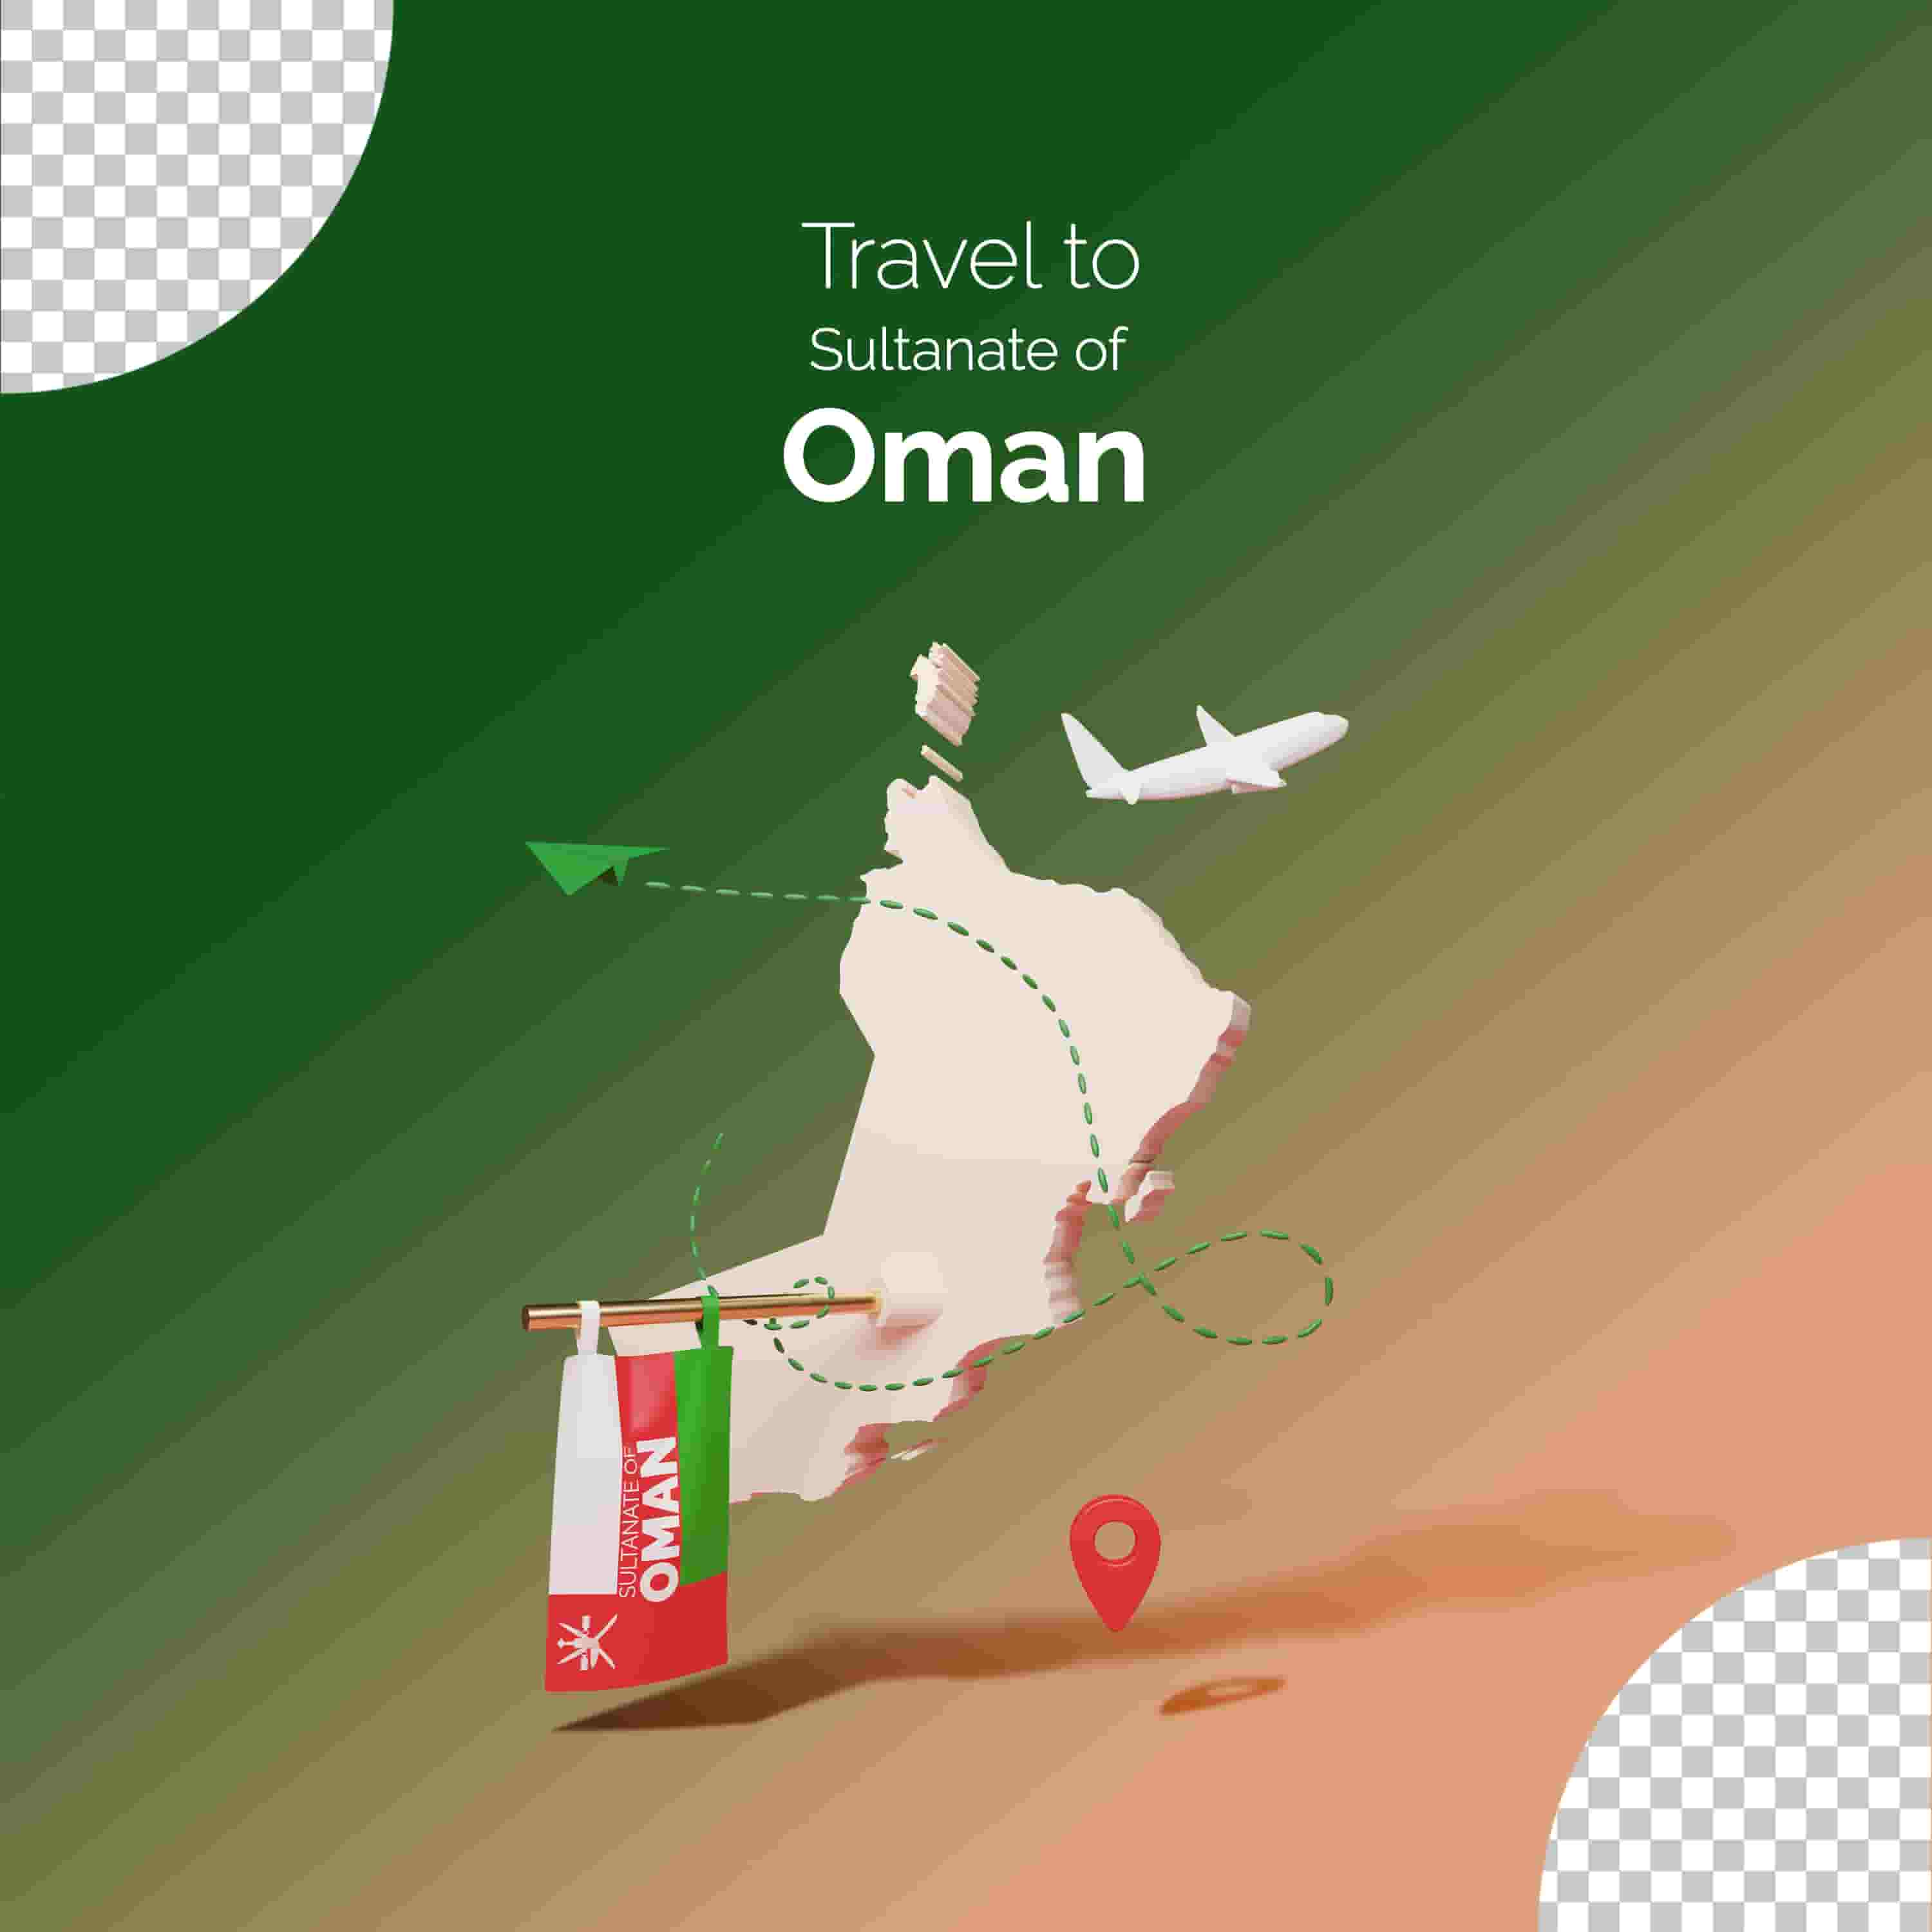 travel agency in oman 